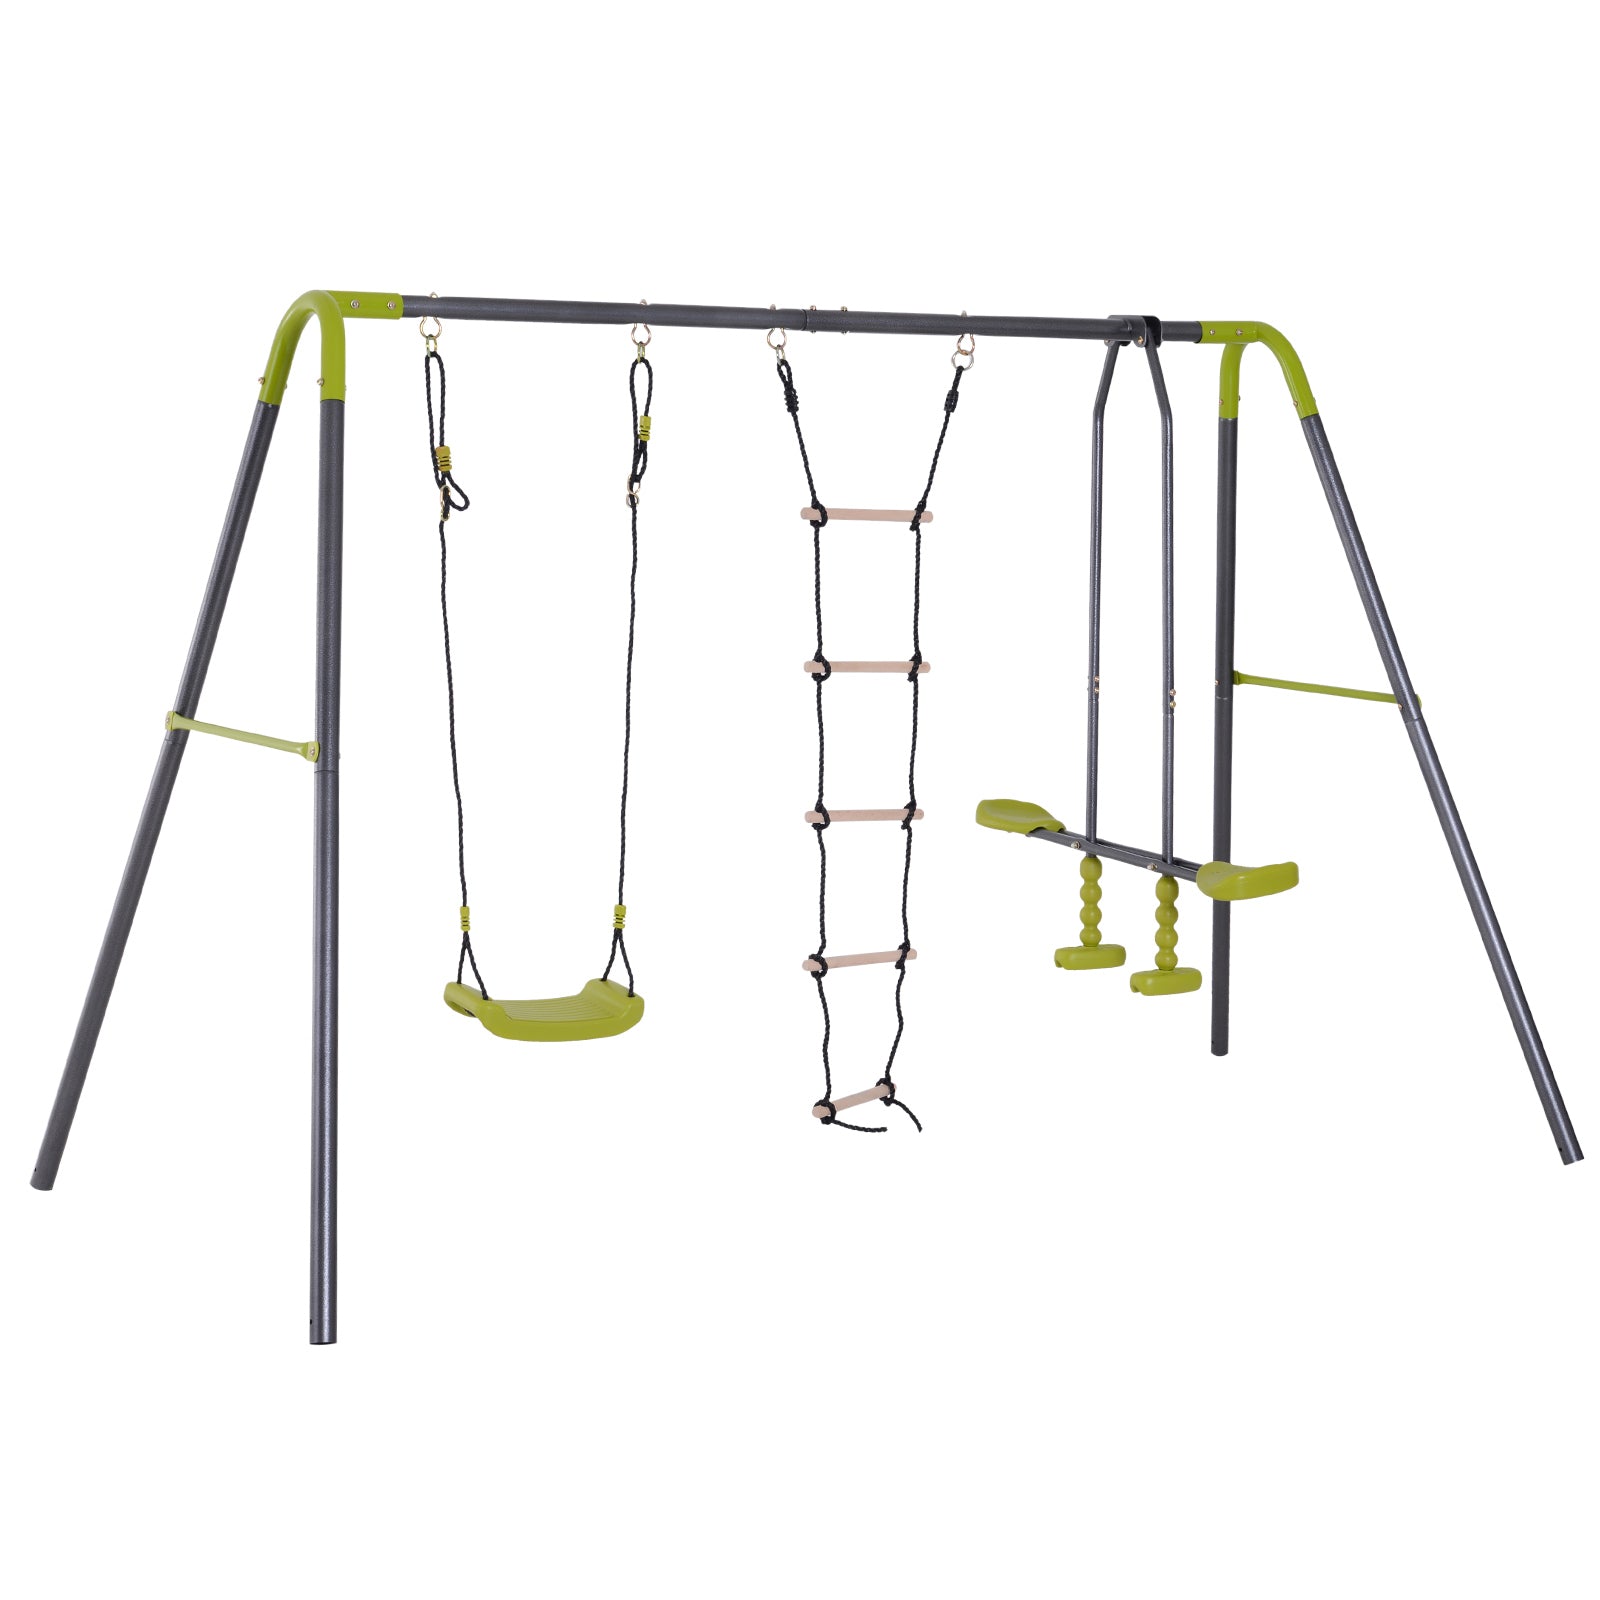 HOMCOM 3 In 1 Garden Swing Set w/ Metal Frame, for 4 Children, Ages 3-10 Years